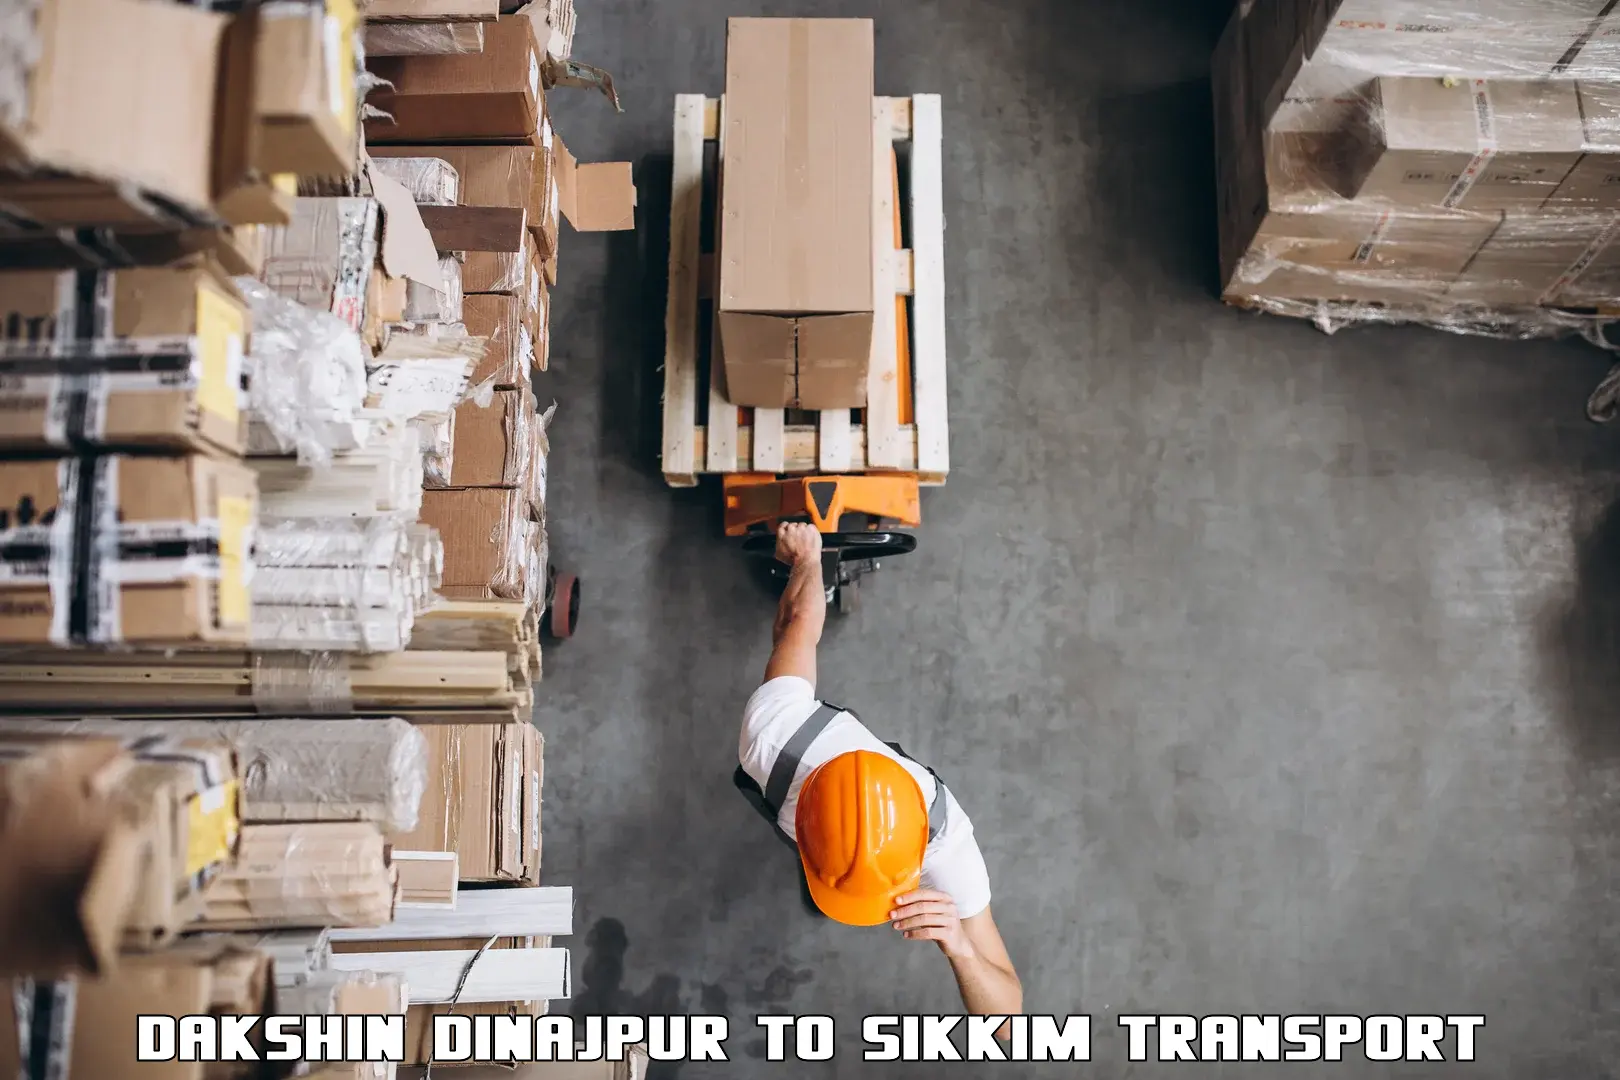 Transport in sharing Dakshin Dinajpur to Gangtok